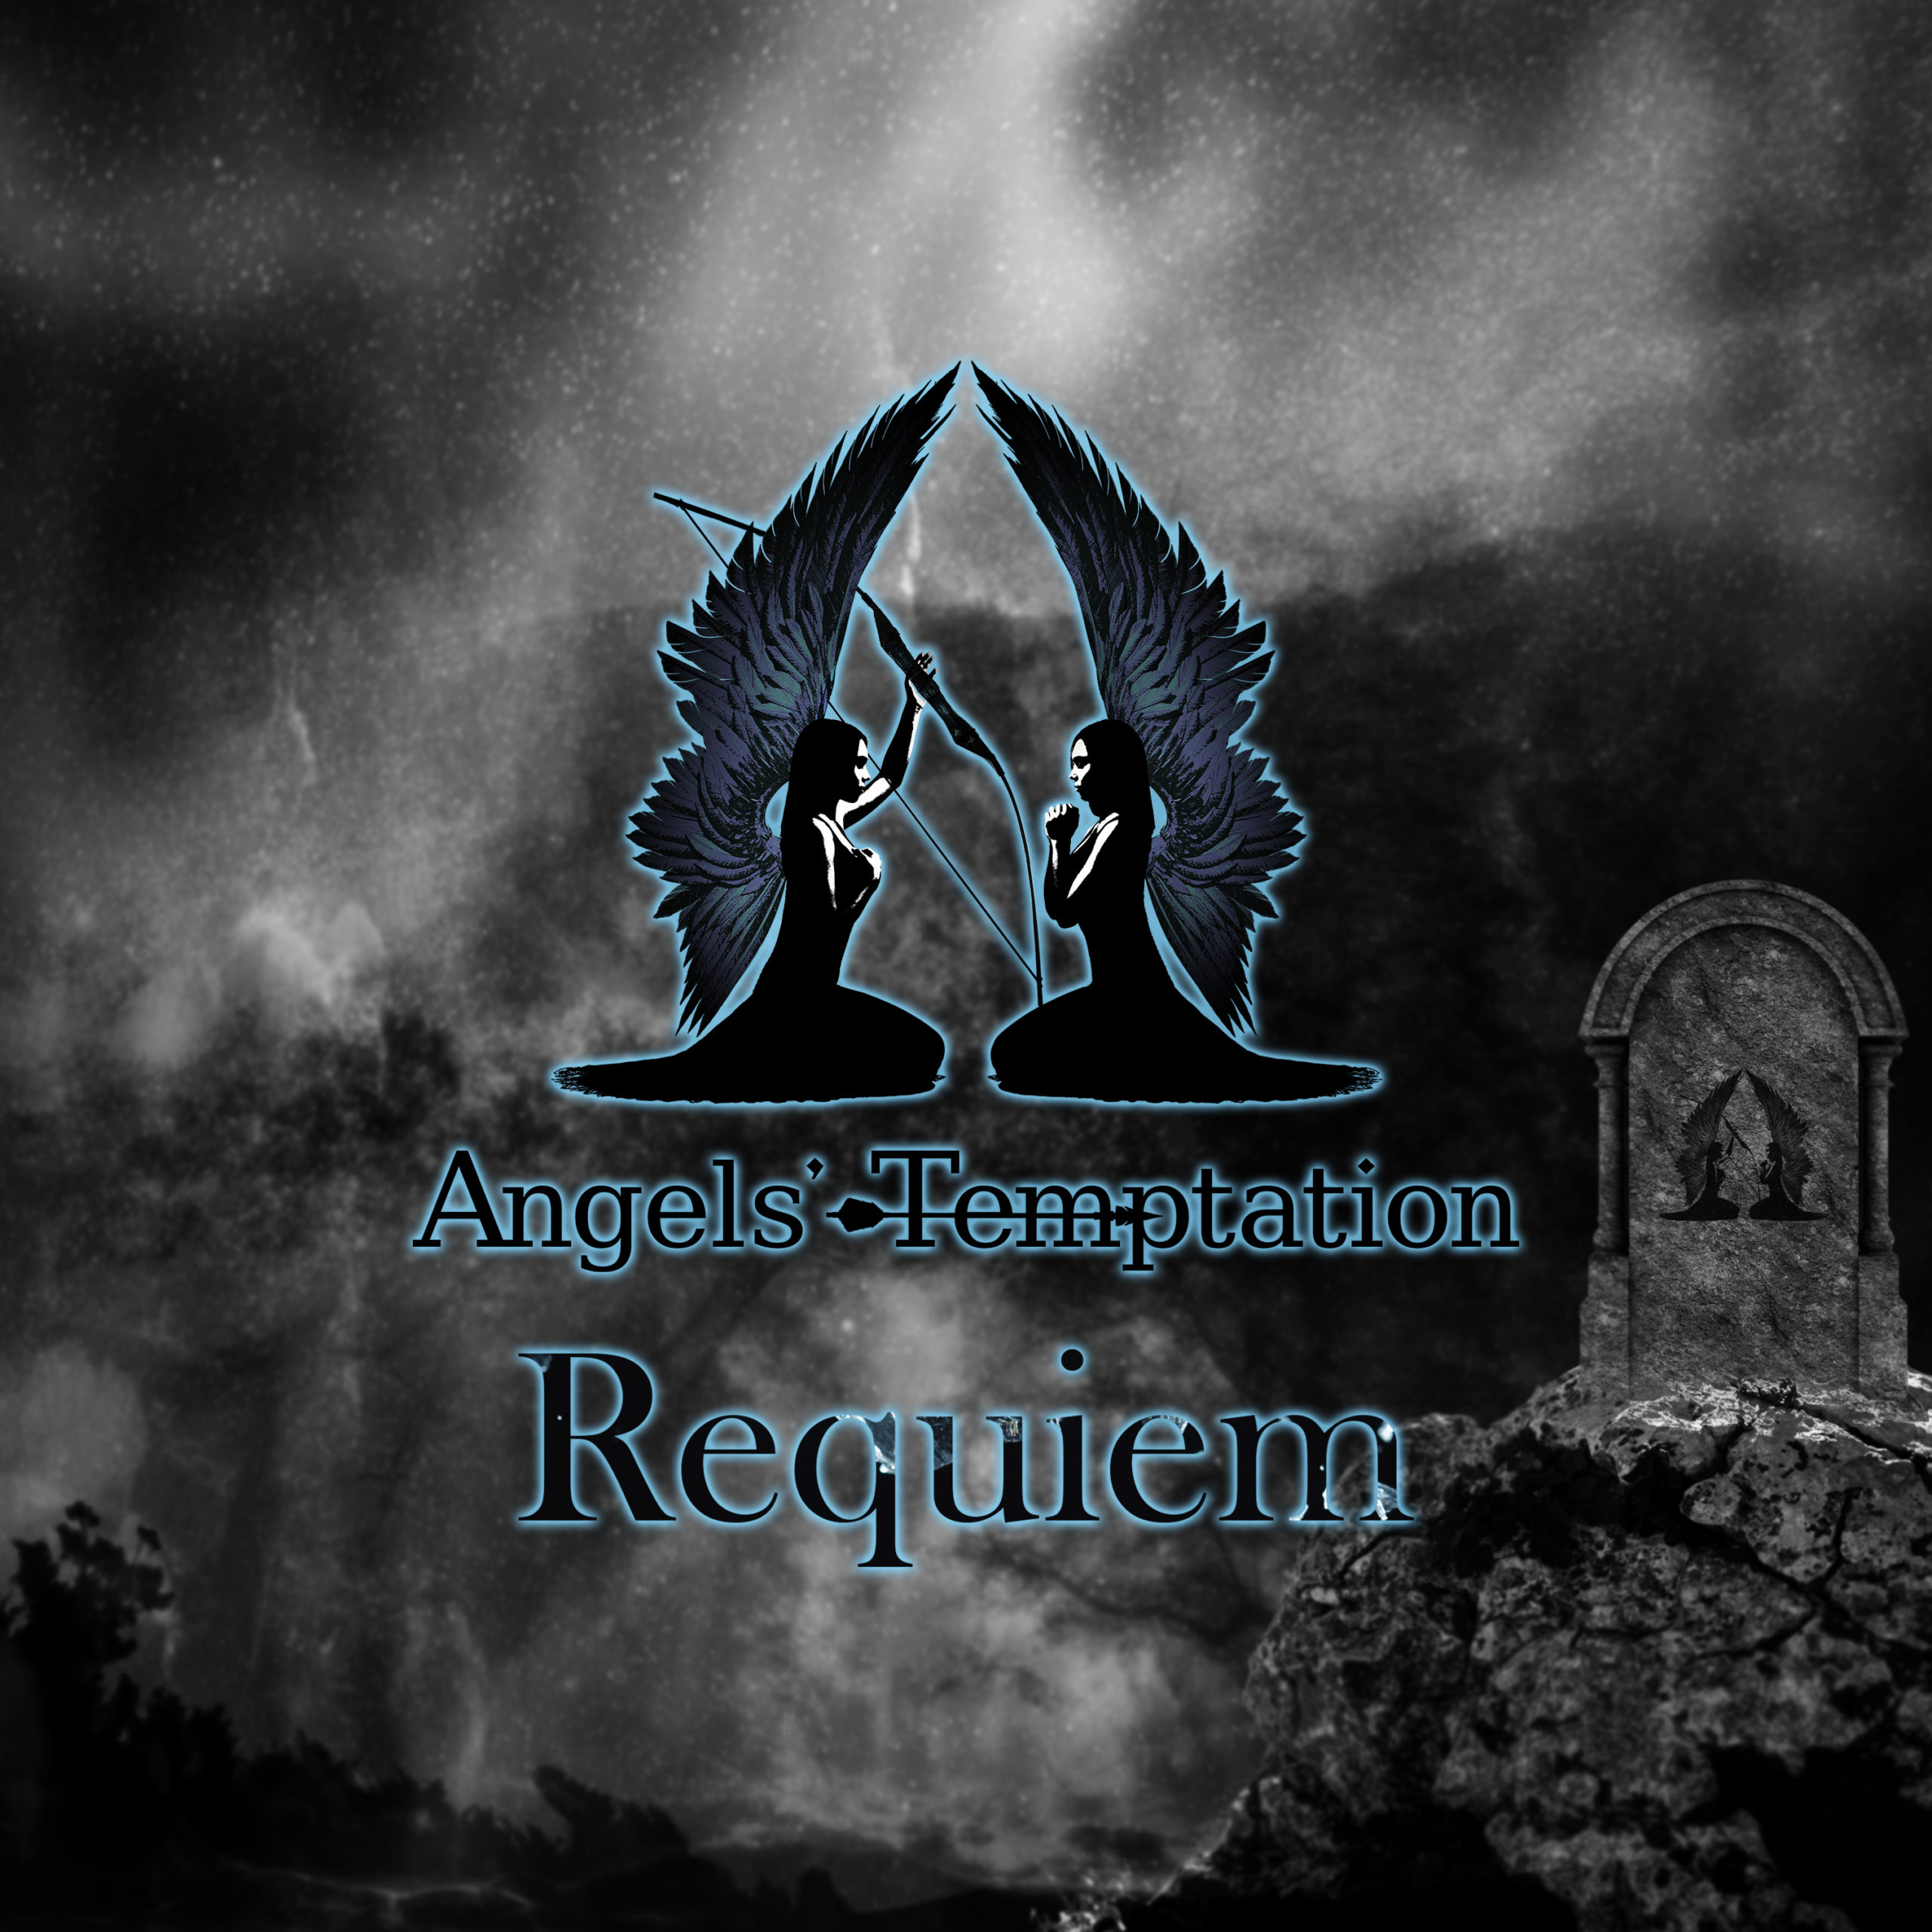 Angels’ Temptation 4th Single「Requiem」Release